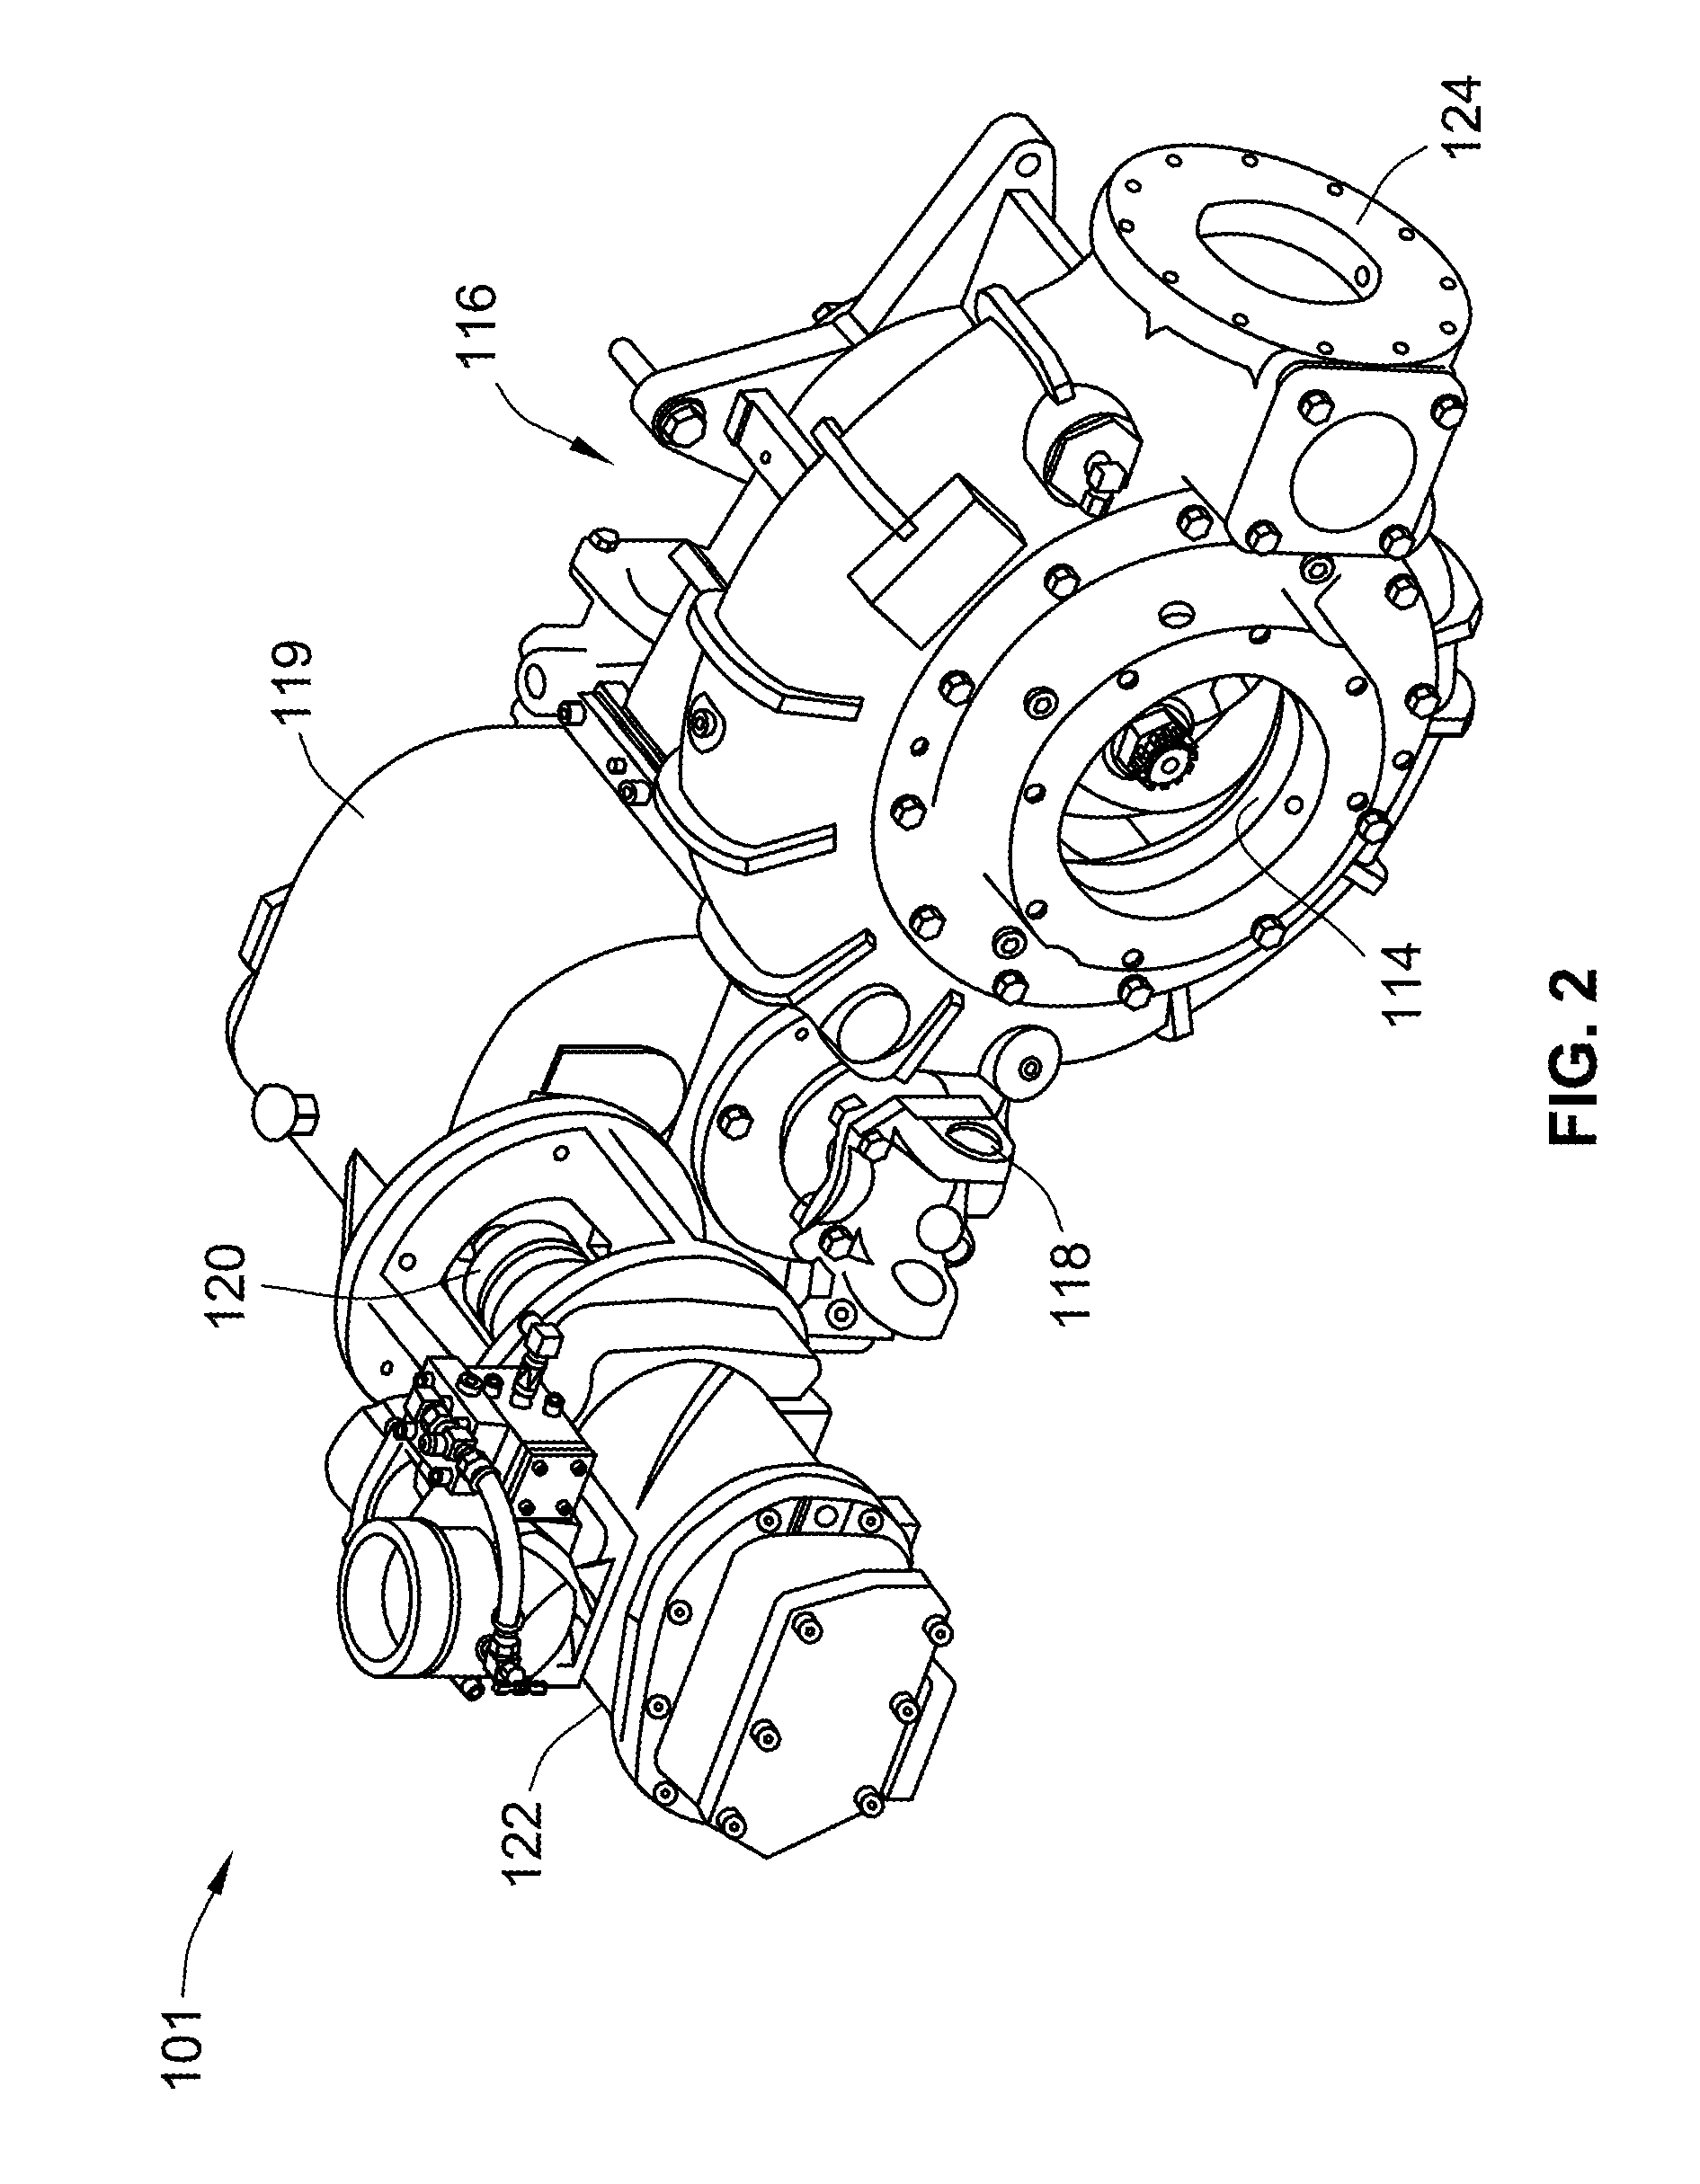 Integrated Pumper Apparatus